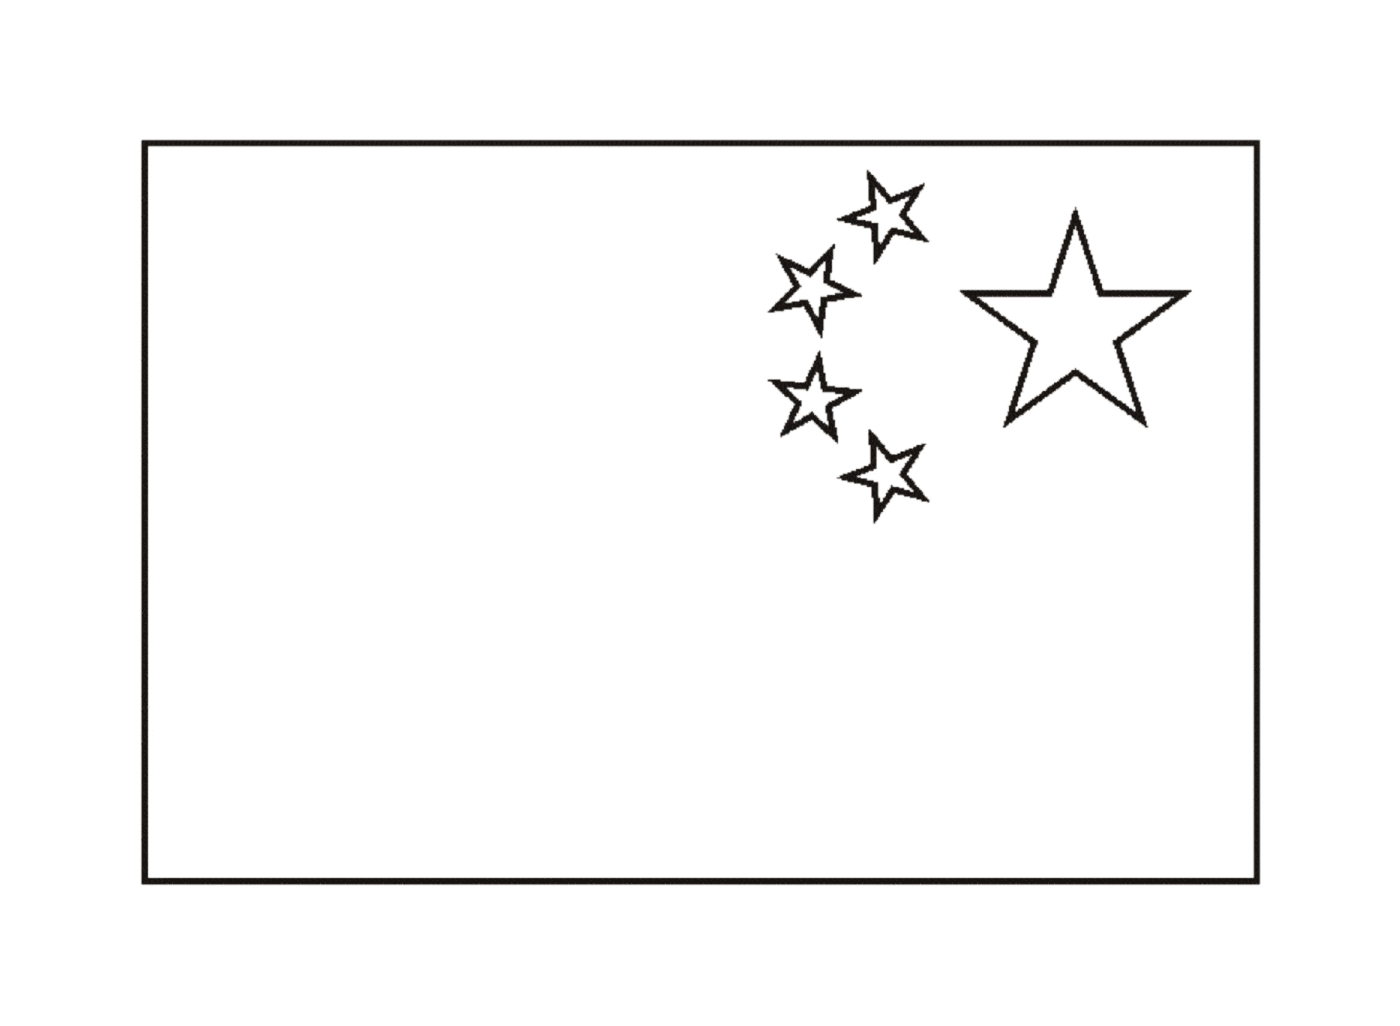   Un drapeau de la Chine 